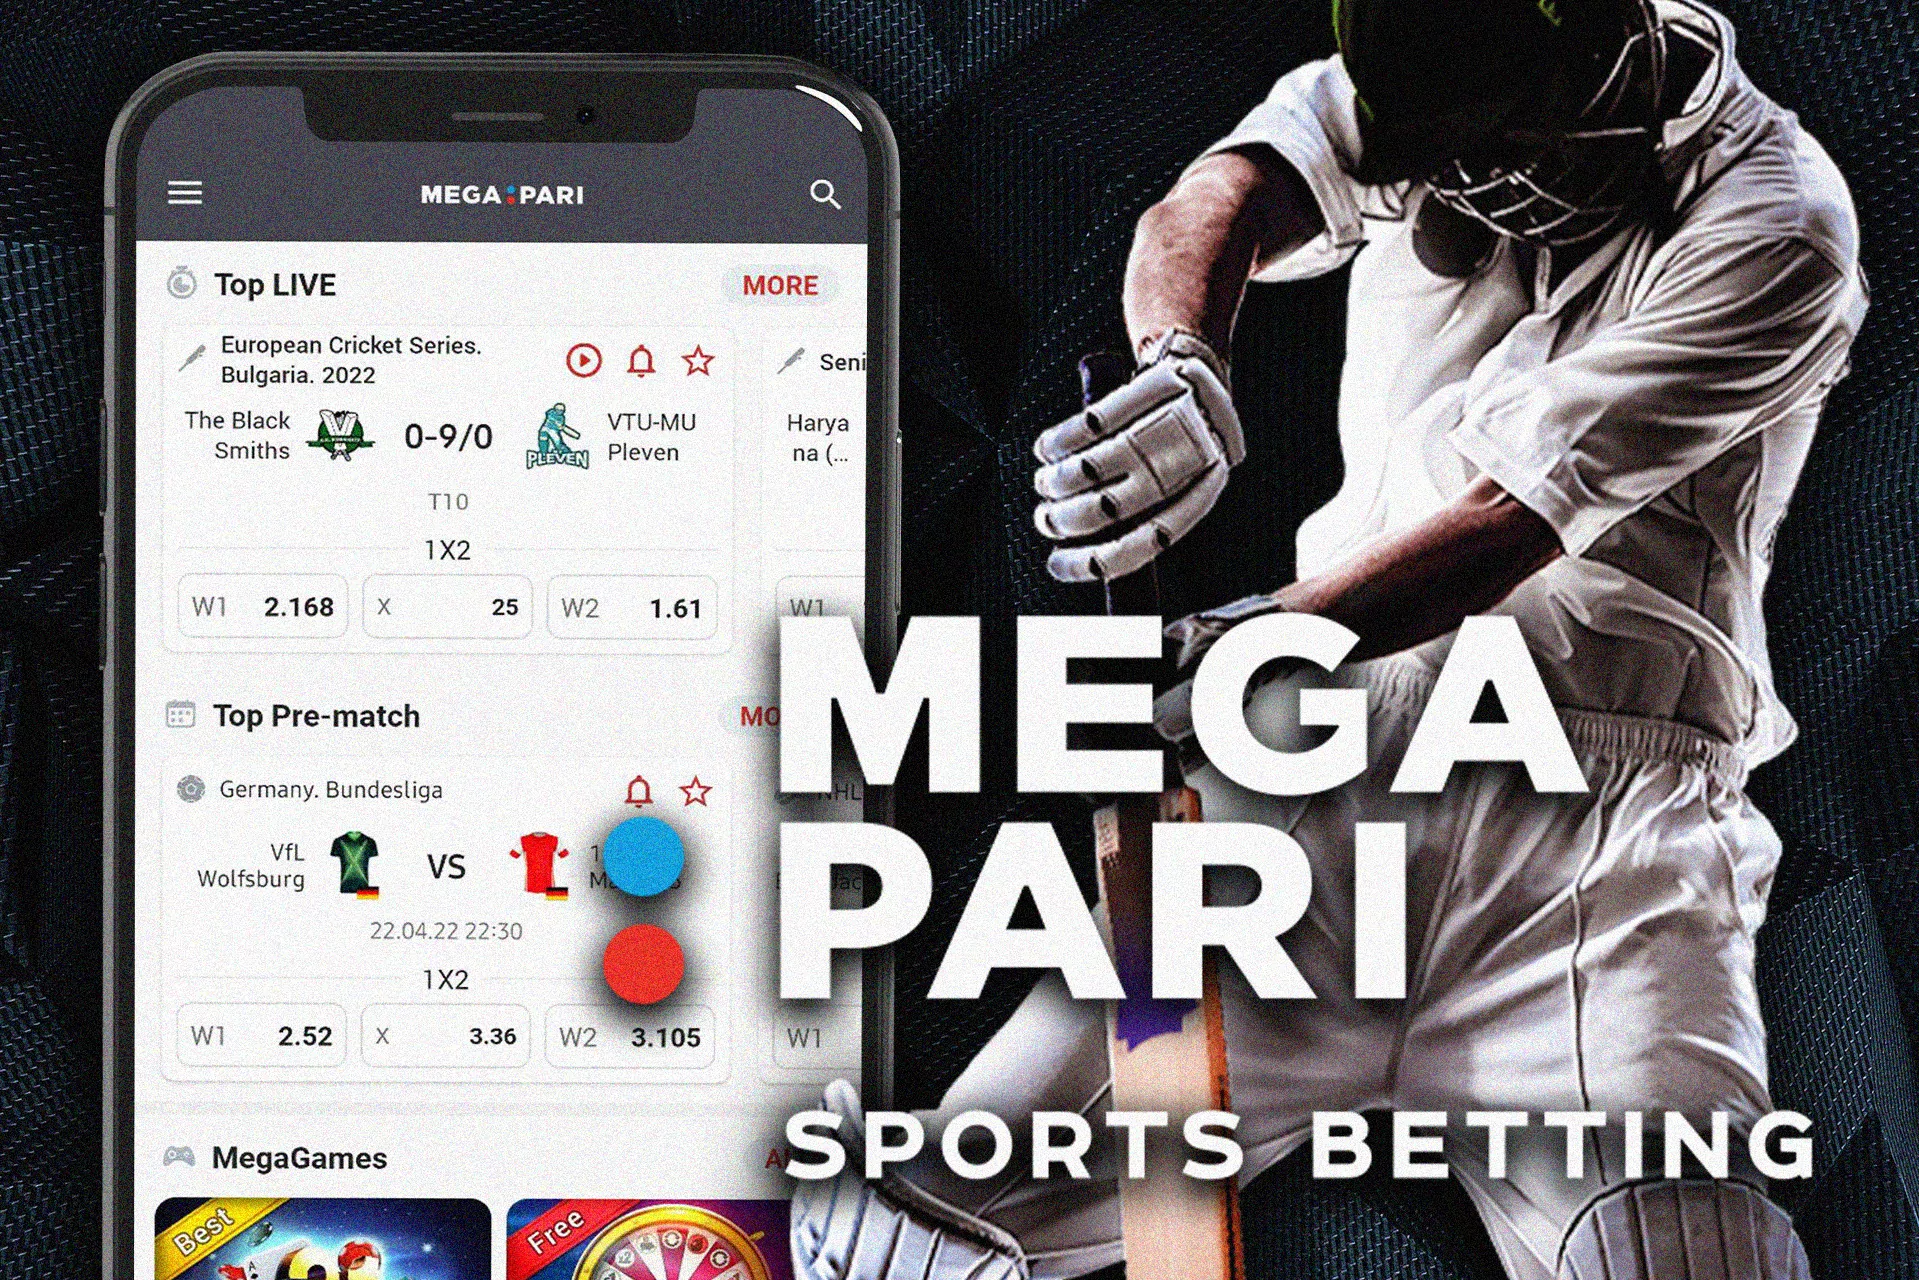 Megapari app for cricket betting.